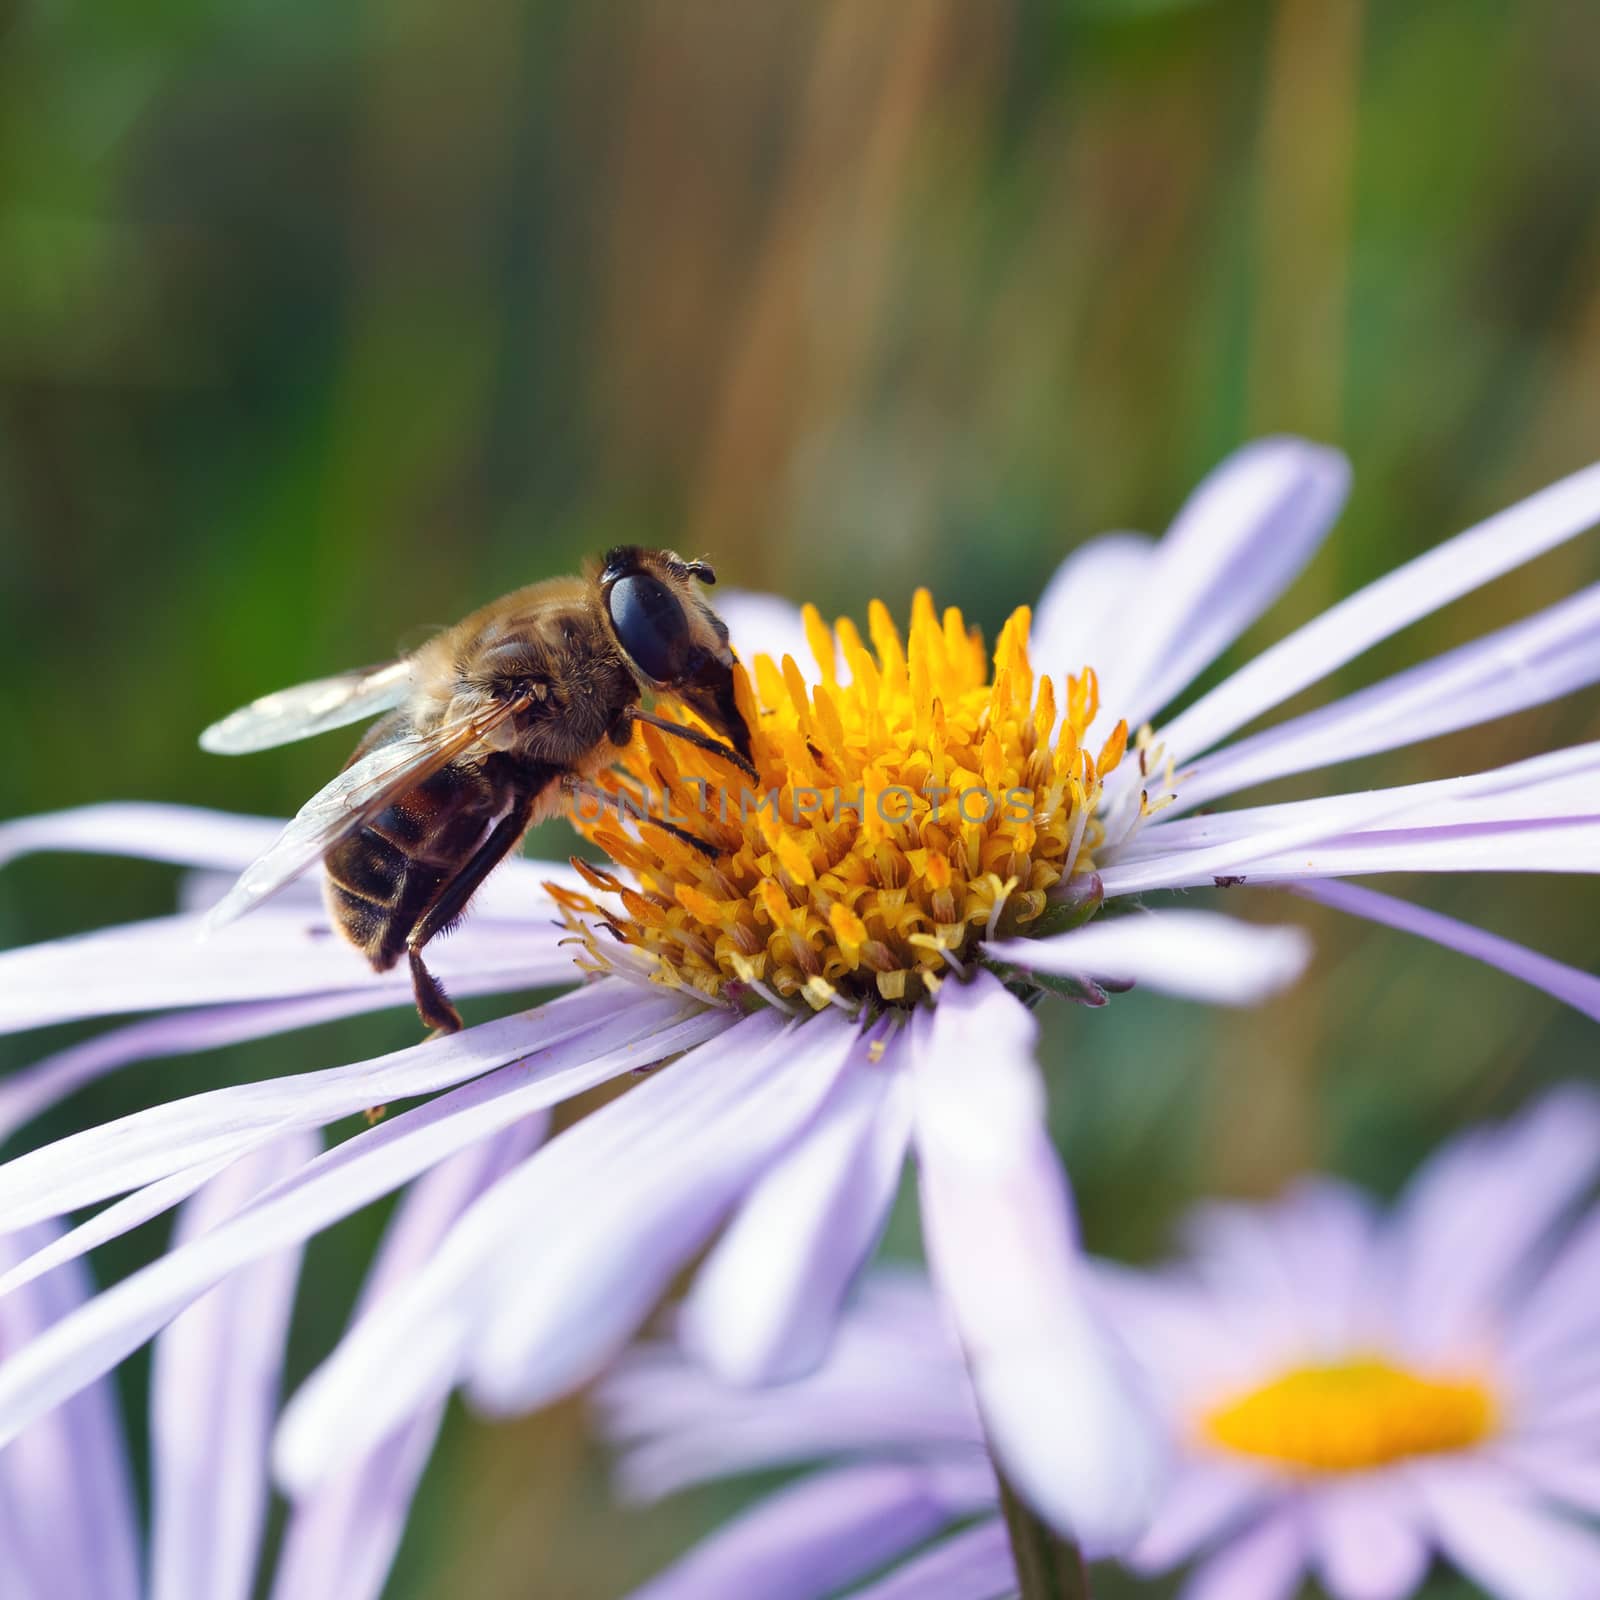 Bee on a daisy flower by serkucher